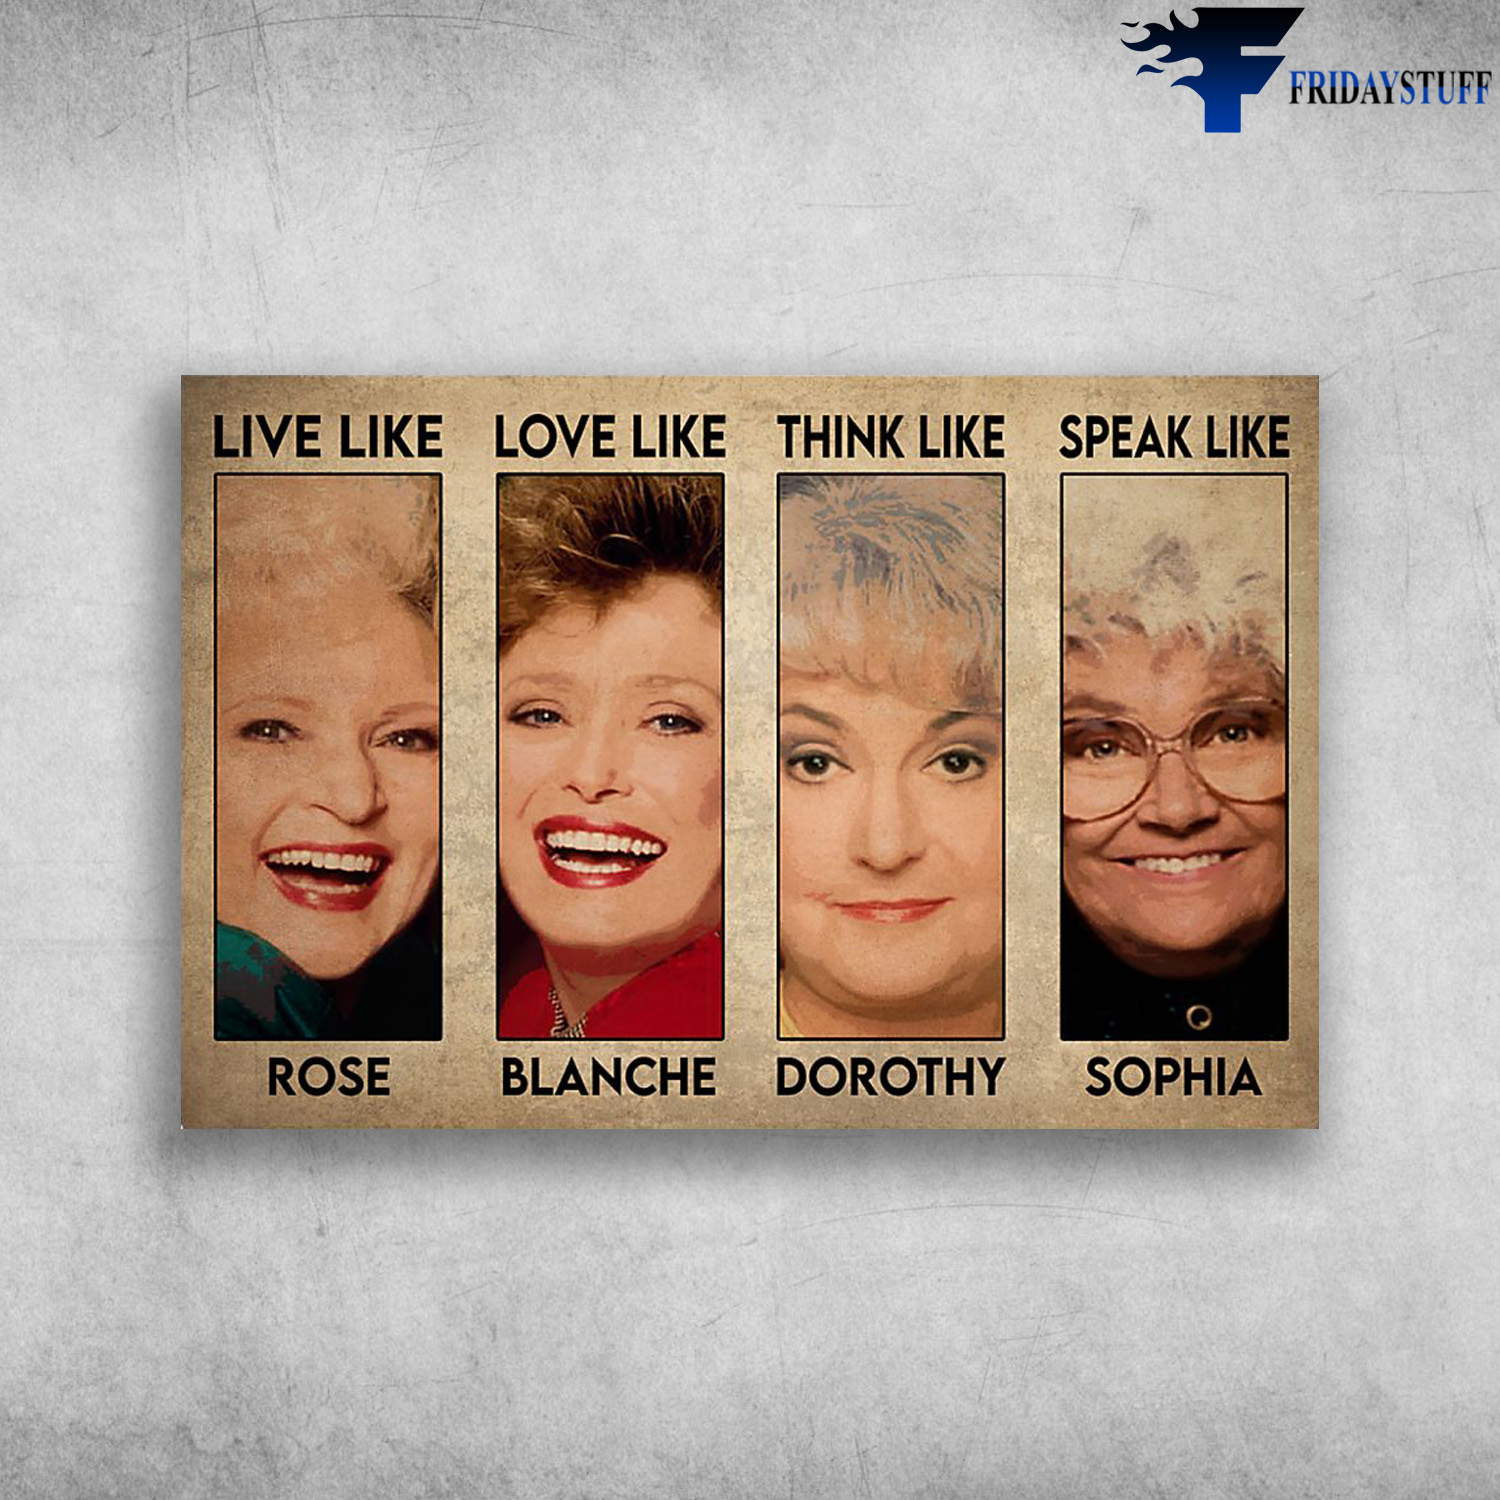 Live Like Rose, Love Live Blanche, Think Like Dorothy, Speak Like Sophia